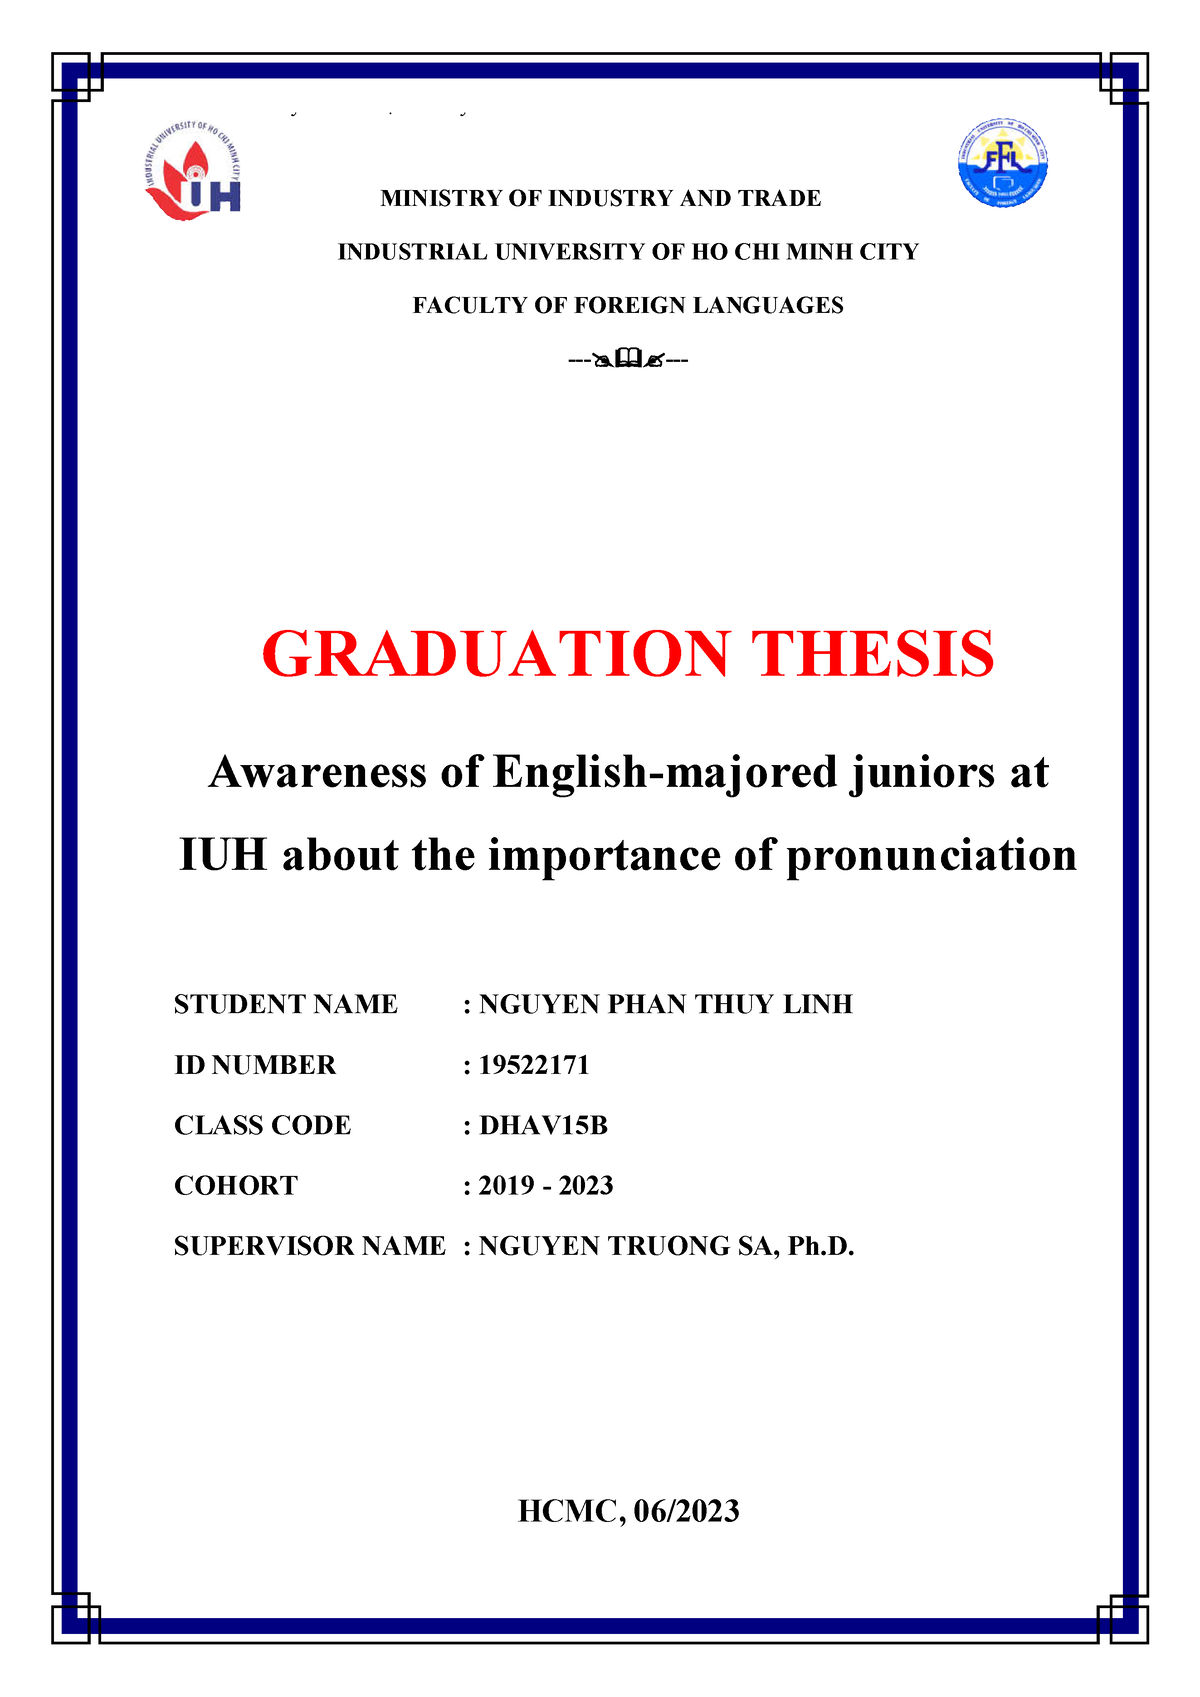 graduation thesis topic